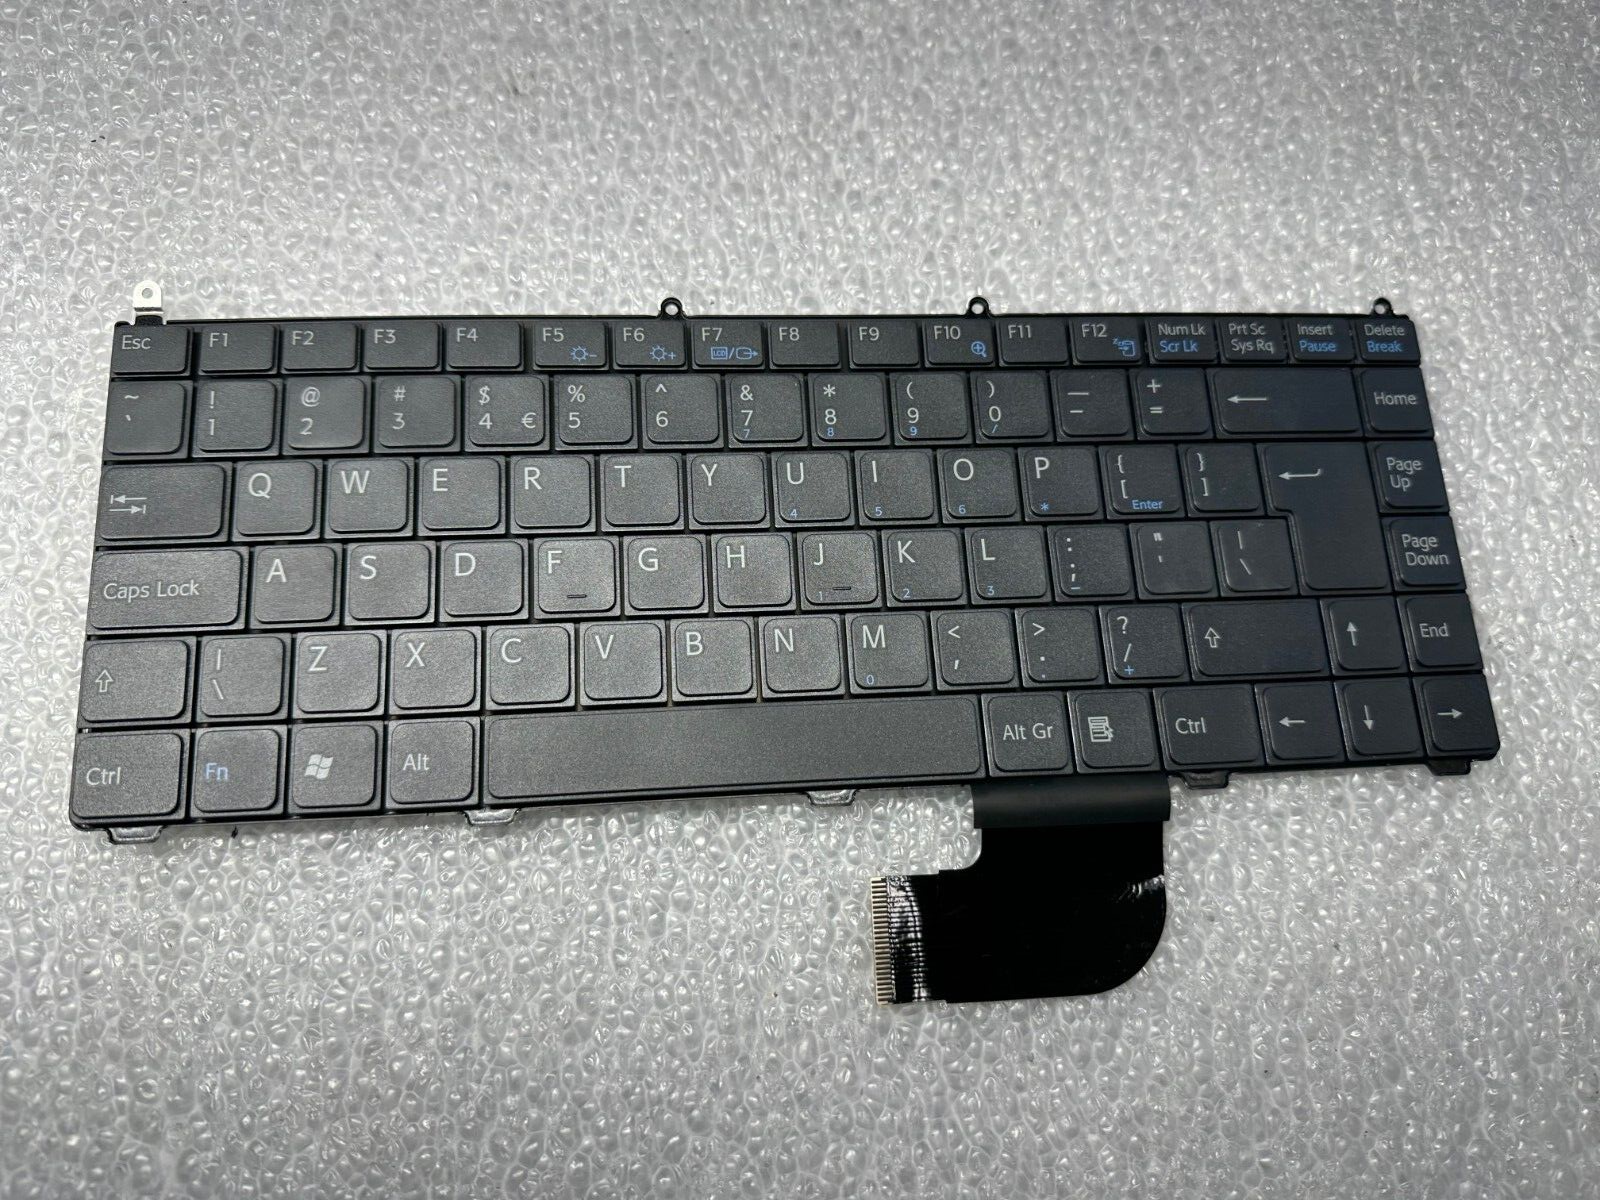 Sony Vaio VGN-AR VGN-FE Laptop Keyboard - $20.00